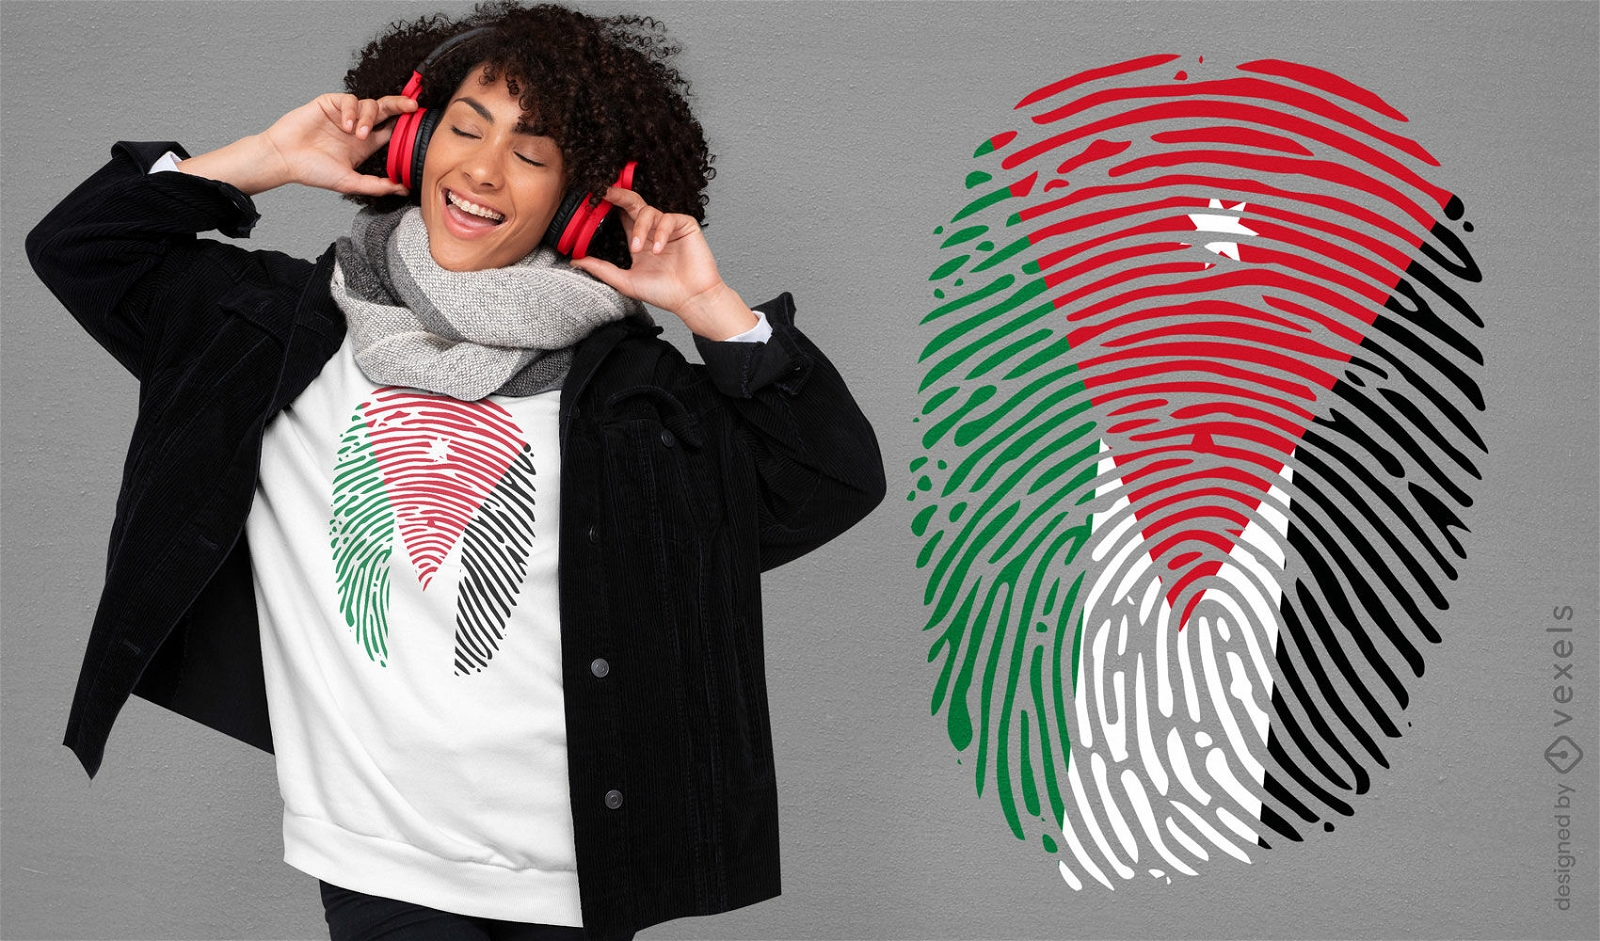 Jordan-Flaggen-T-Shirt-Design mit Fingerabdr?cken